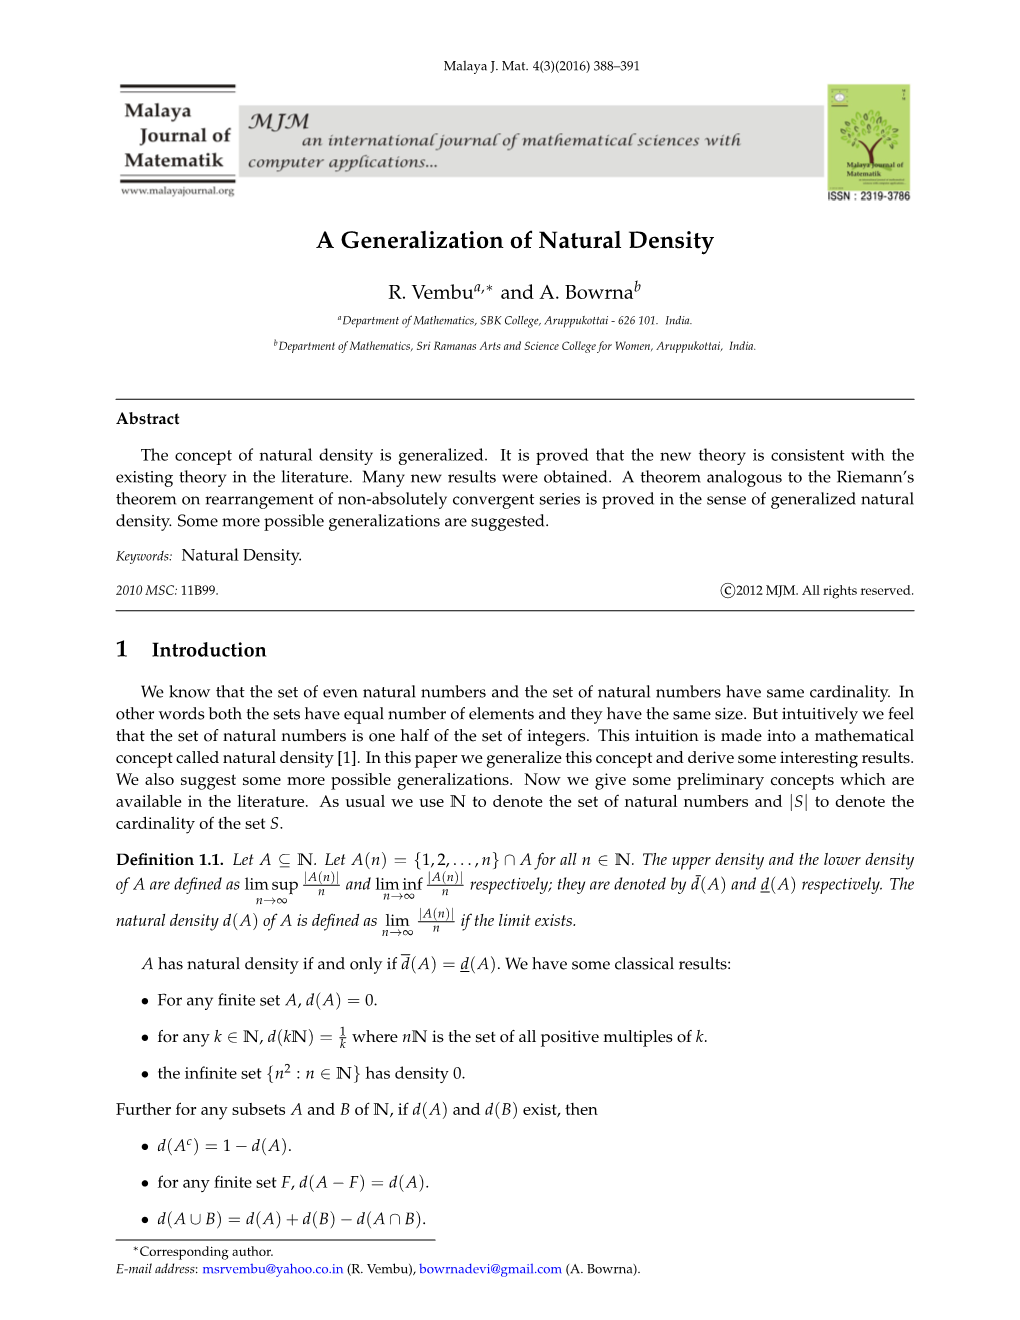 A Generalization of Natural Density